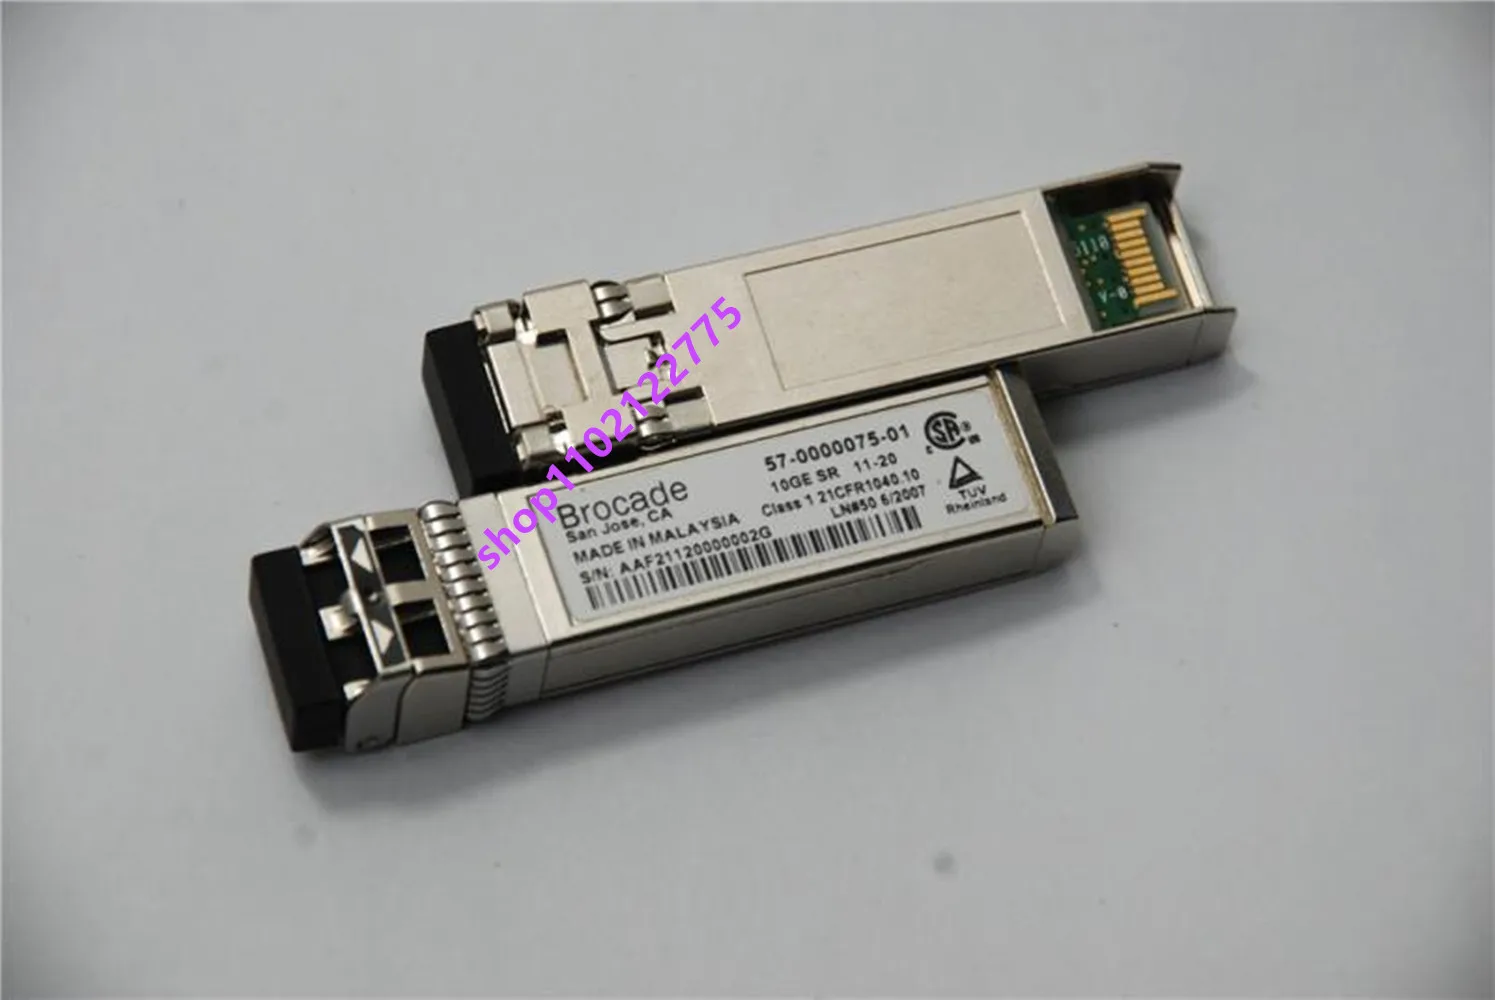 brocade 10GB SR SFP 57-0000075-01  850nm 300M fiber switch brocade Network adapter Switch Optical fiber module/brocade 10g sfp